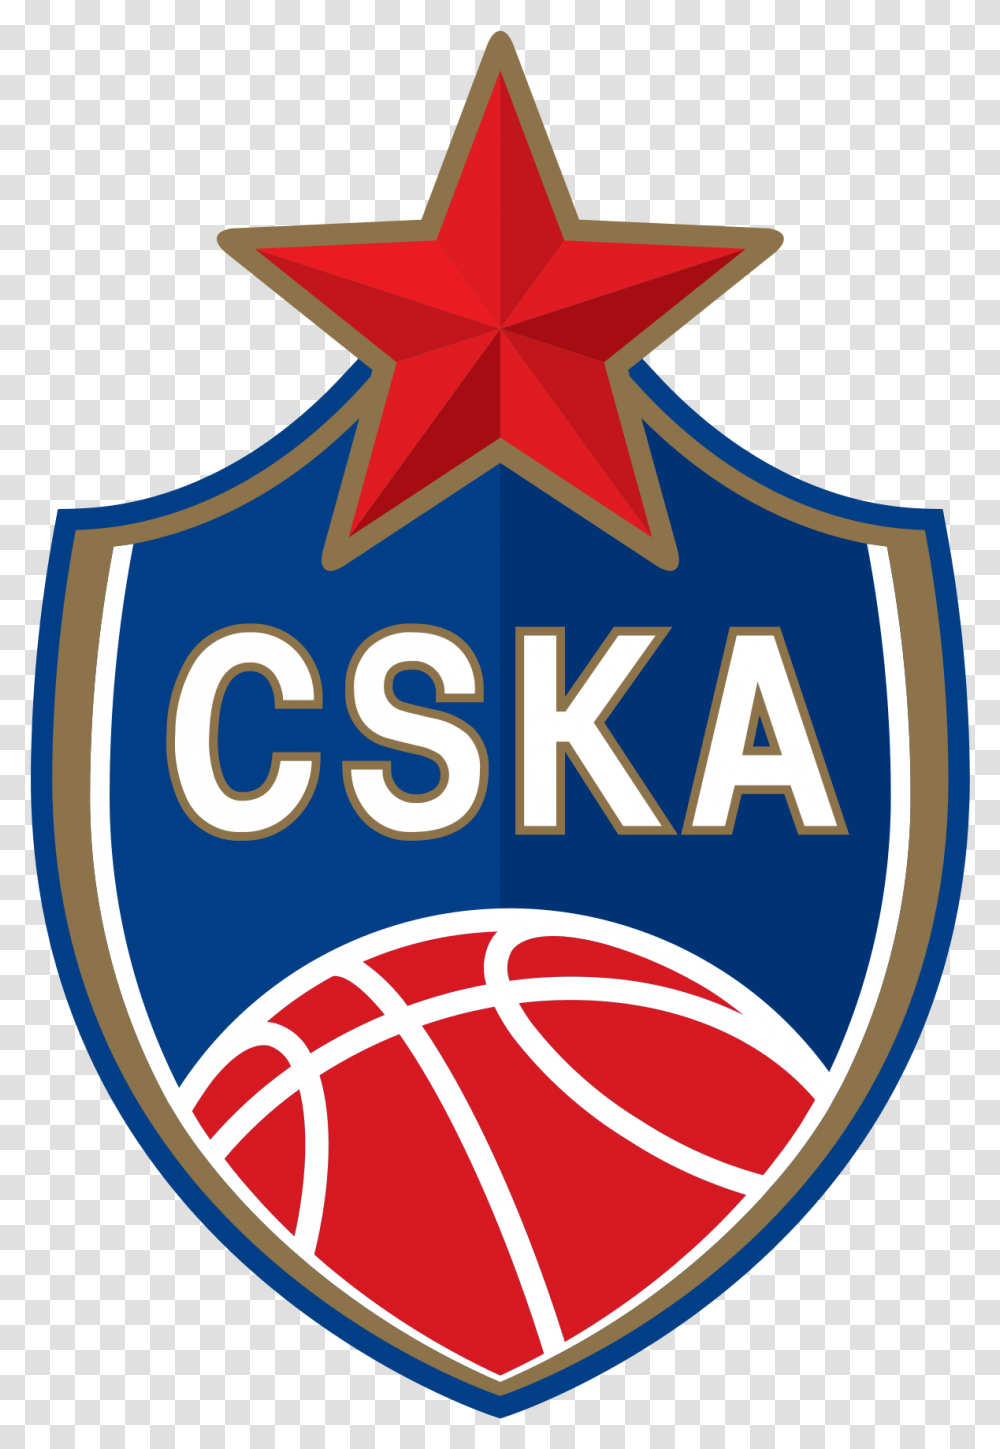 Pbc Cska Moscow Wikipedia Cska Moscow Basketball Logo, Symbol, Trademark, Badge, Armor Transparent Png